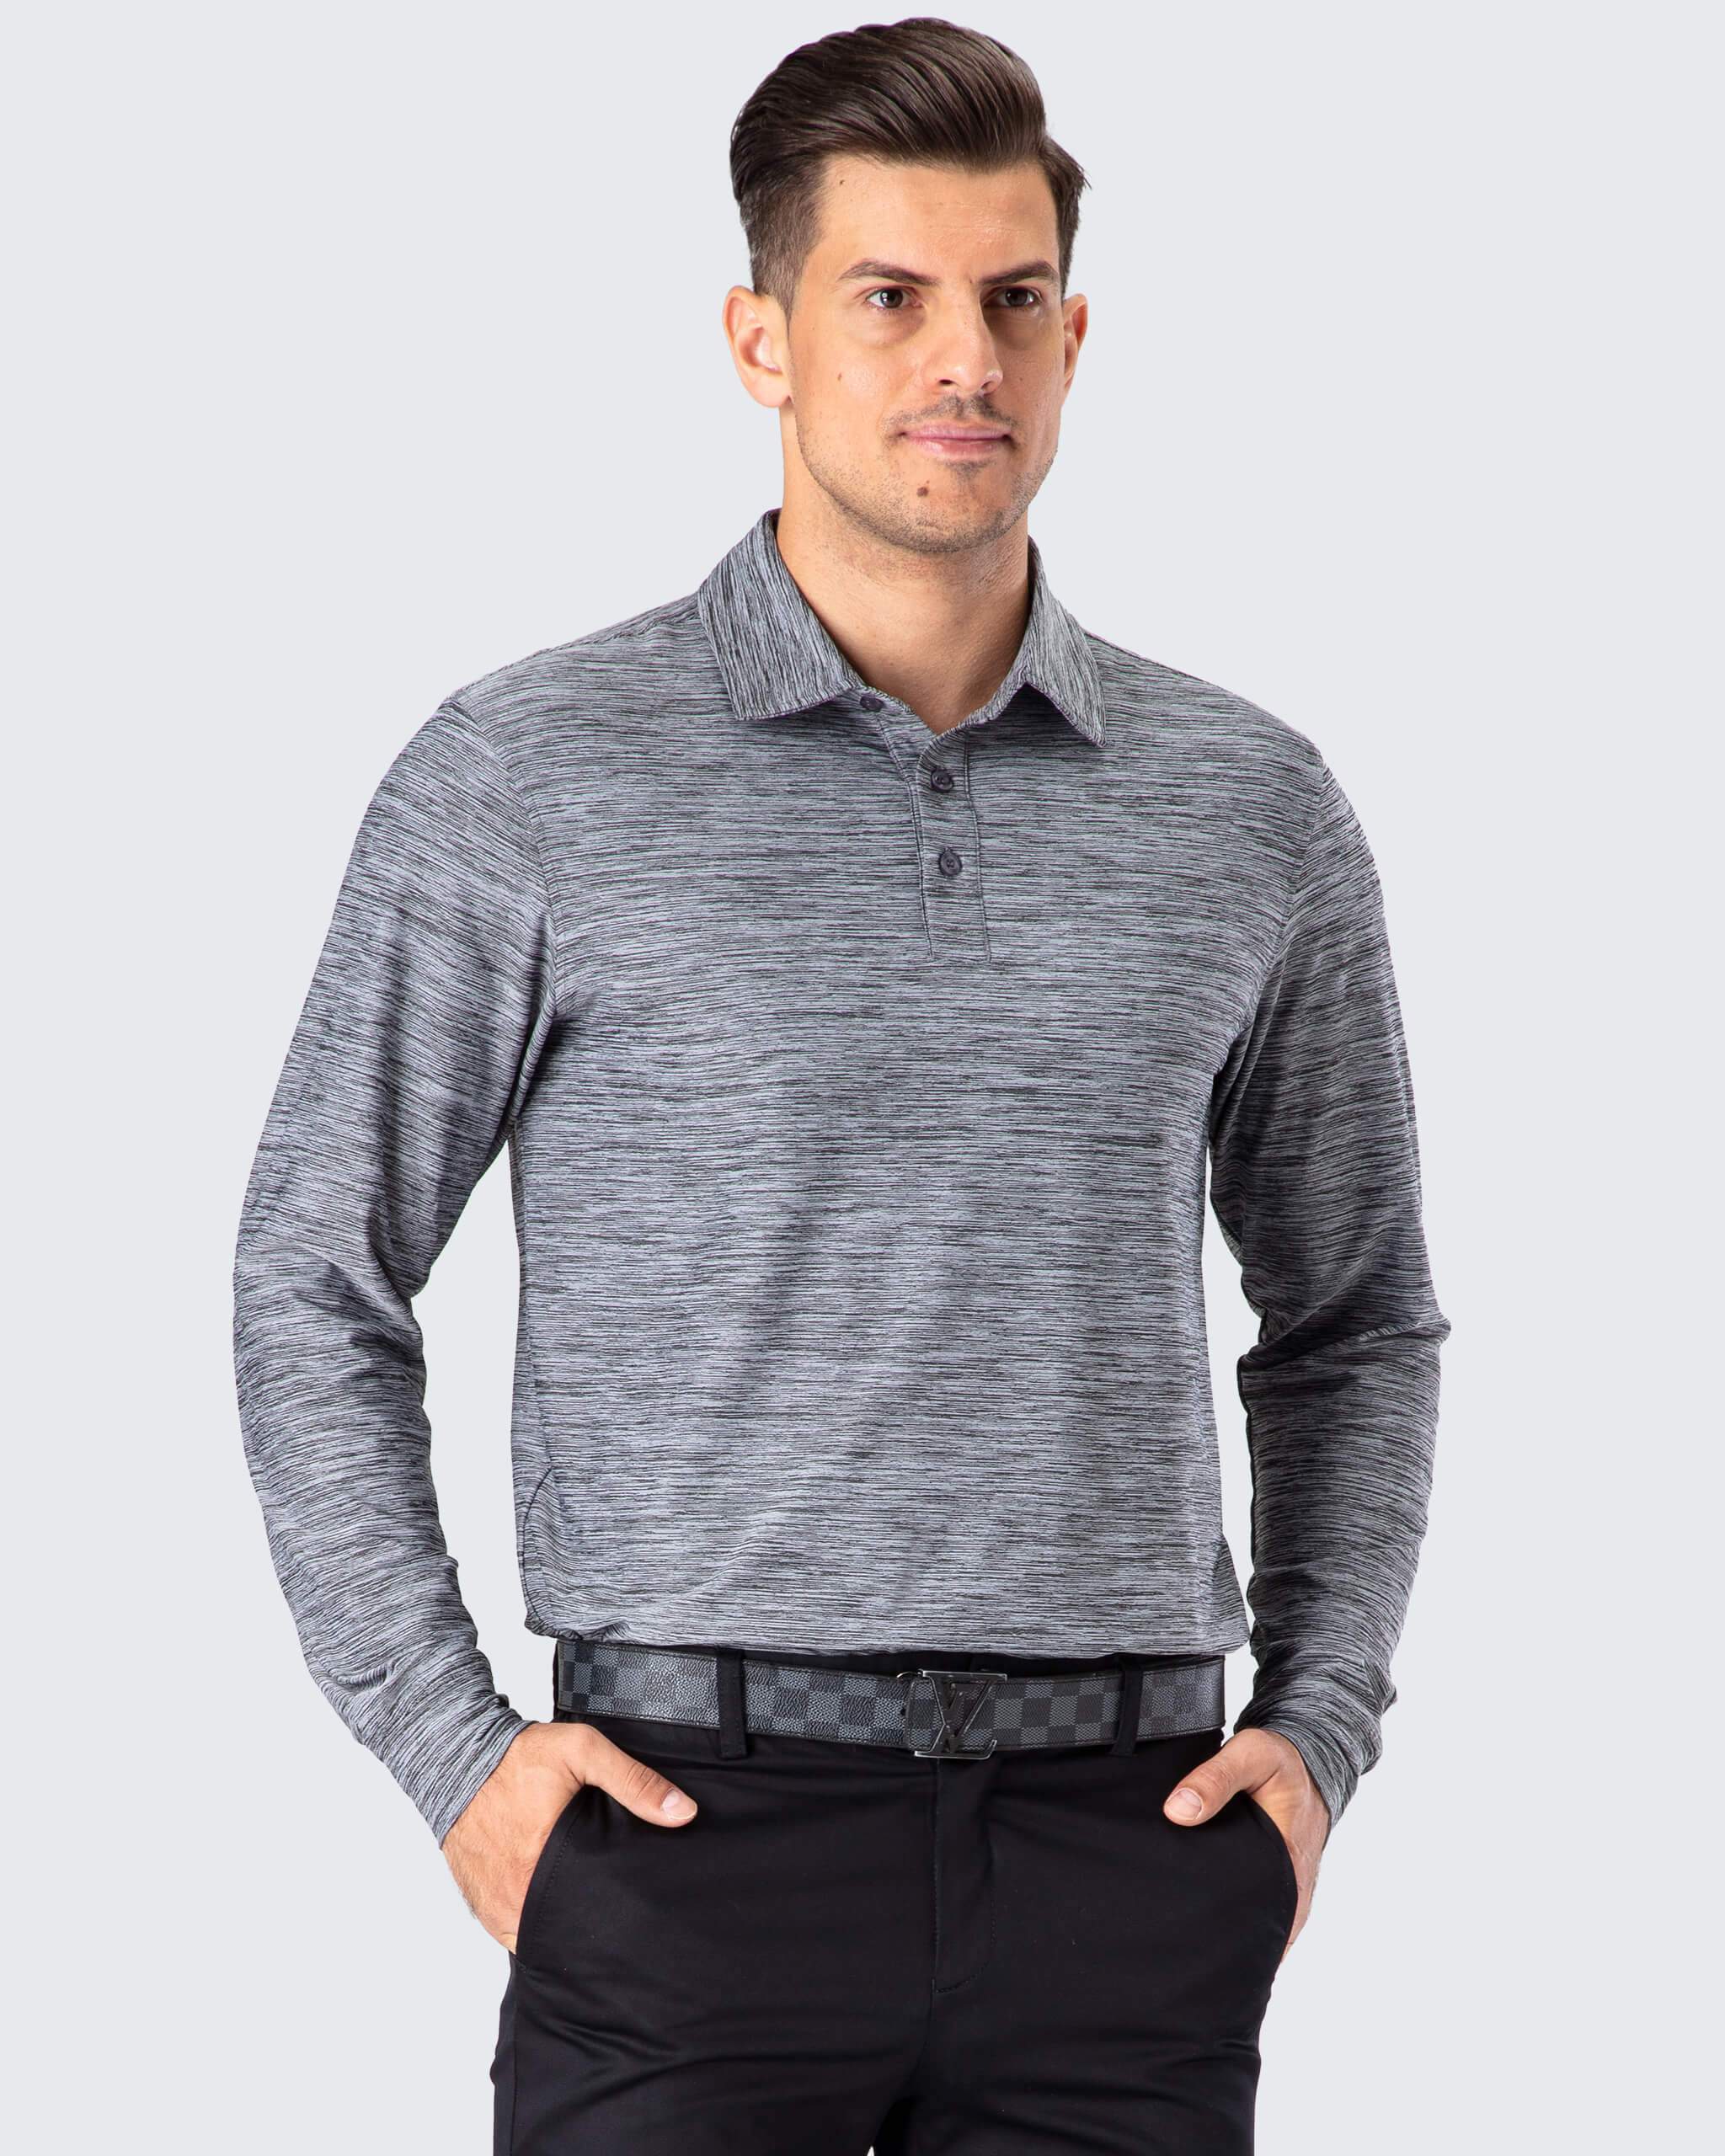 NAVISKIN Men's UPF 50+ Golf Polo Shirt Long Sleeve Quick Dry Athletic Workout, Dark Gray / Medium